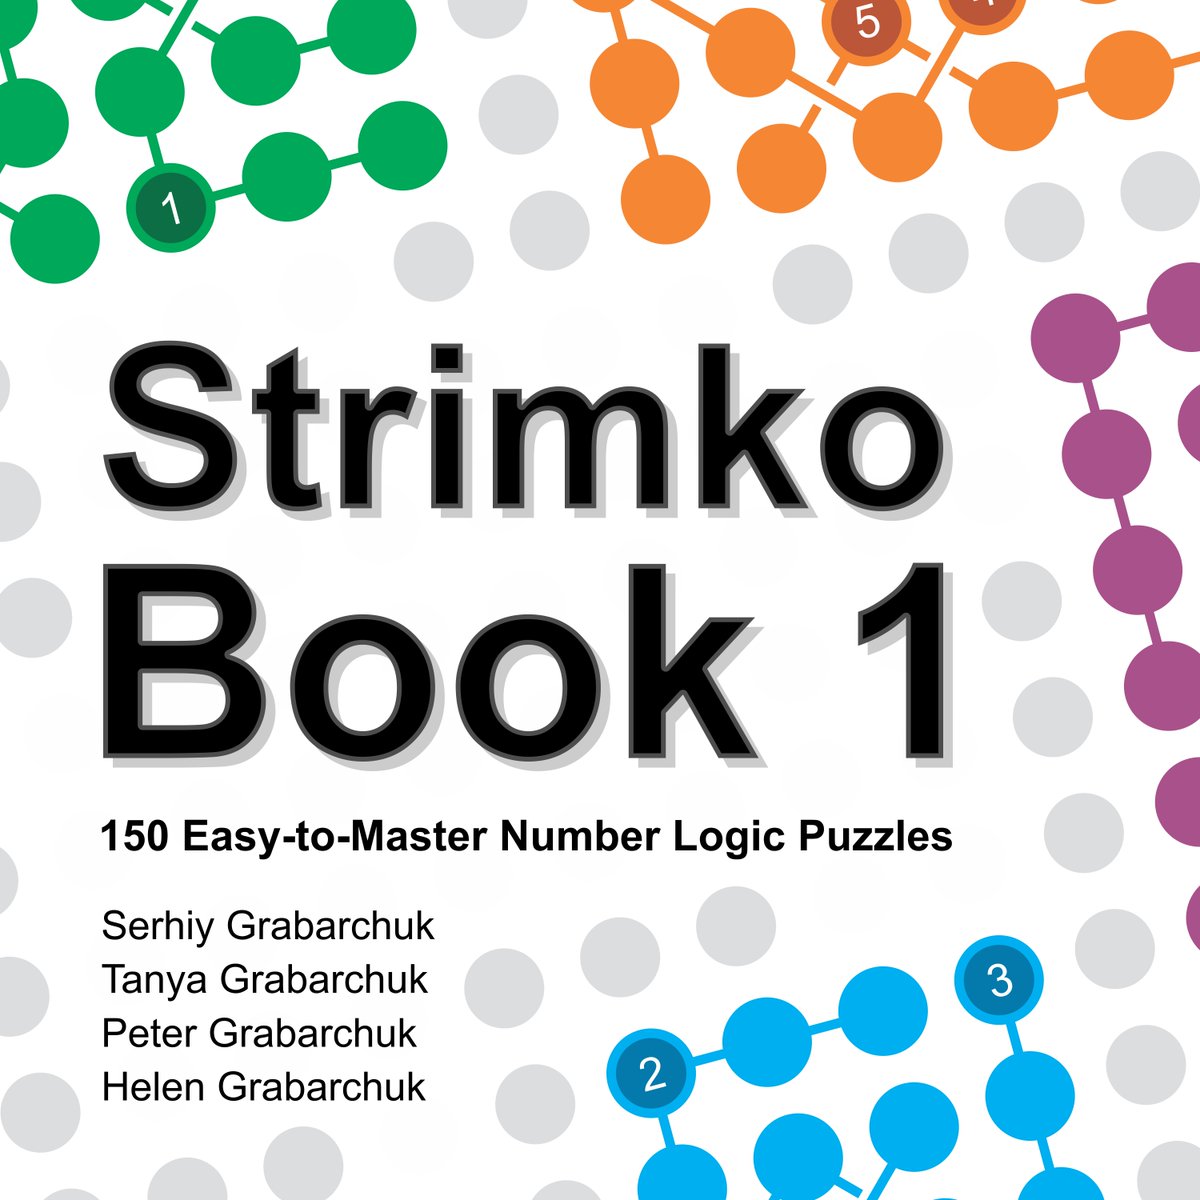 Strimko Book 1